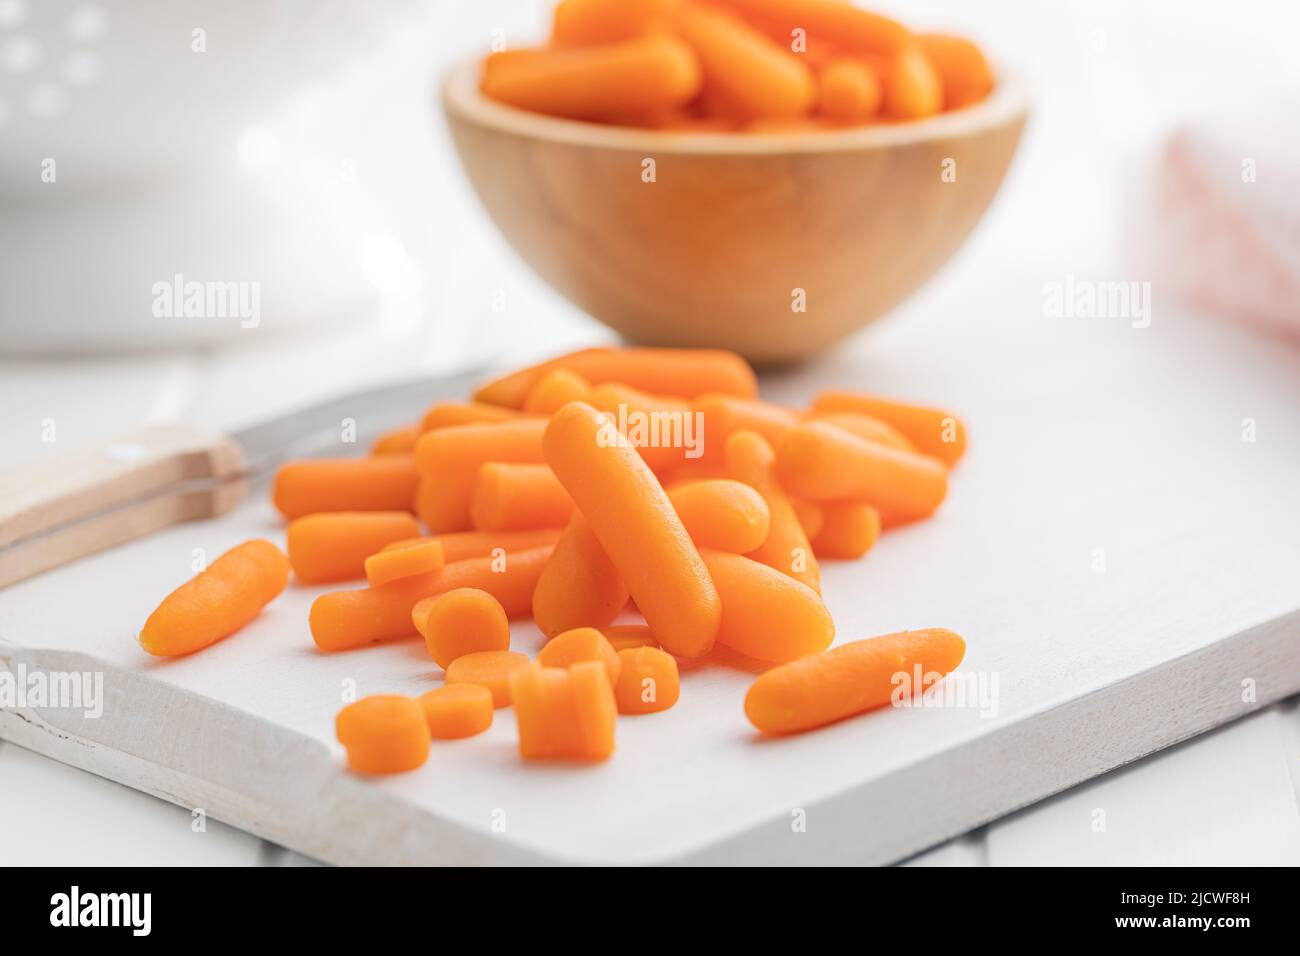 Baby carrot vegetable. Mini orange carrots on white table. Stock Photo